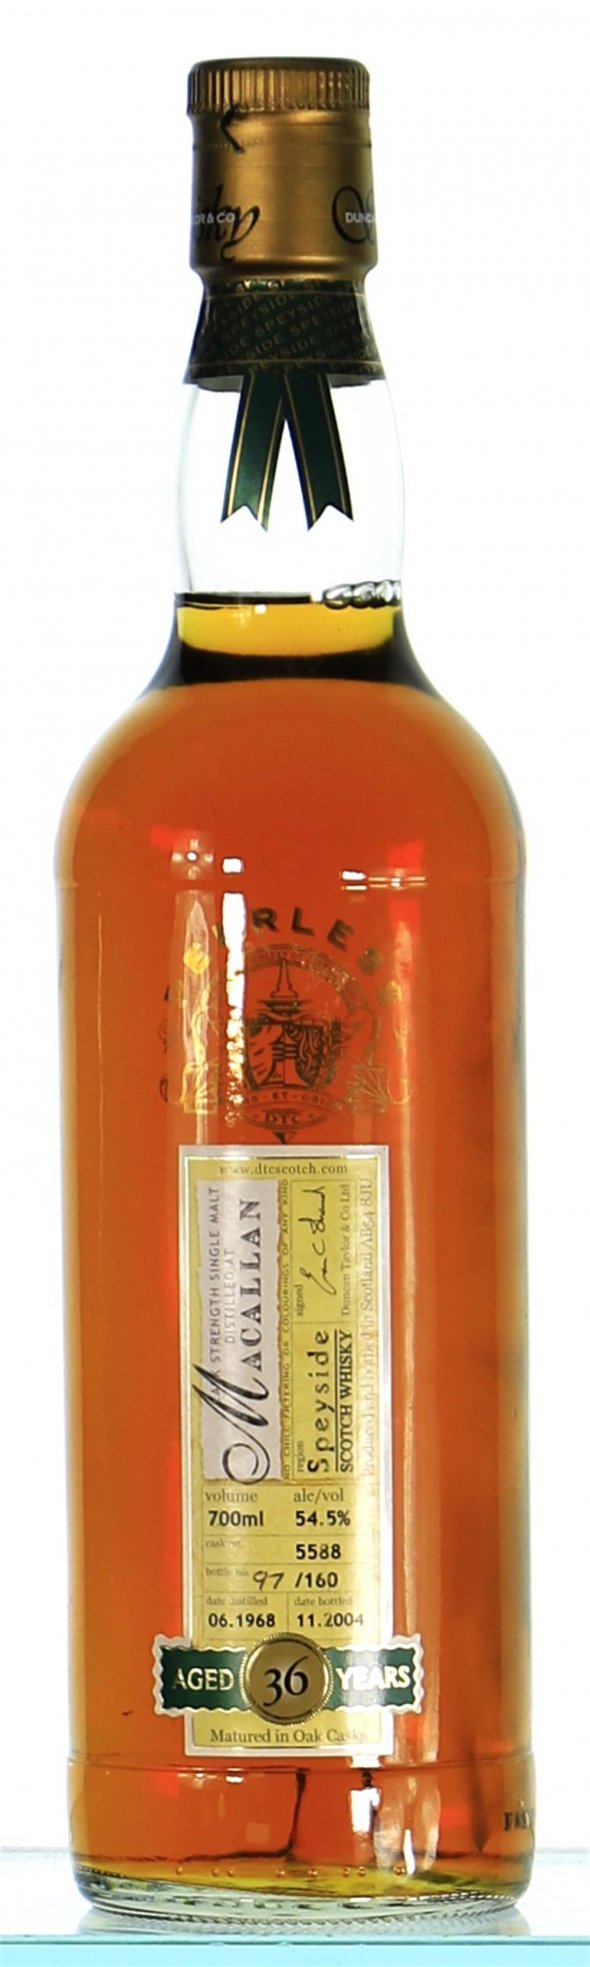 Macallan (Duncan Taylor), Highland Single Malt Cask Strength 5588 36YO Bottled 2004, Speyside